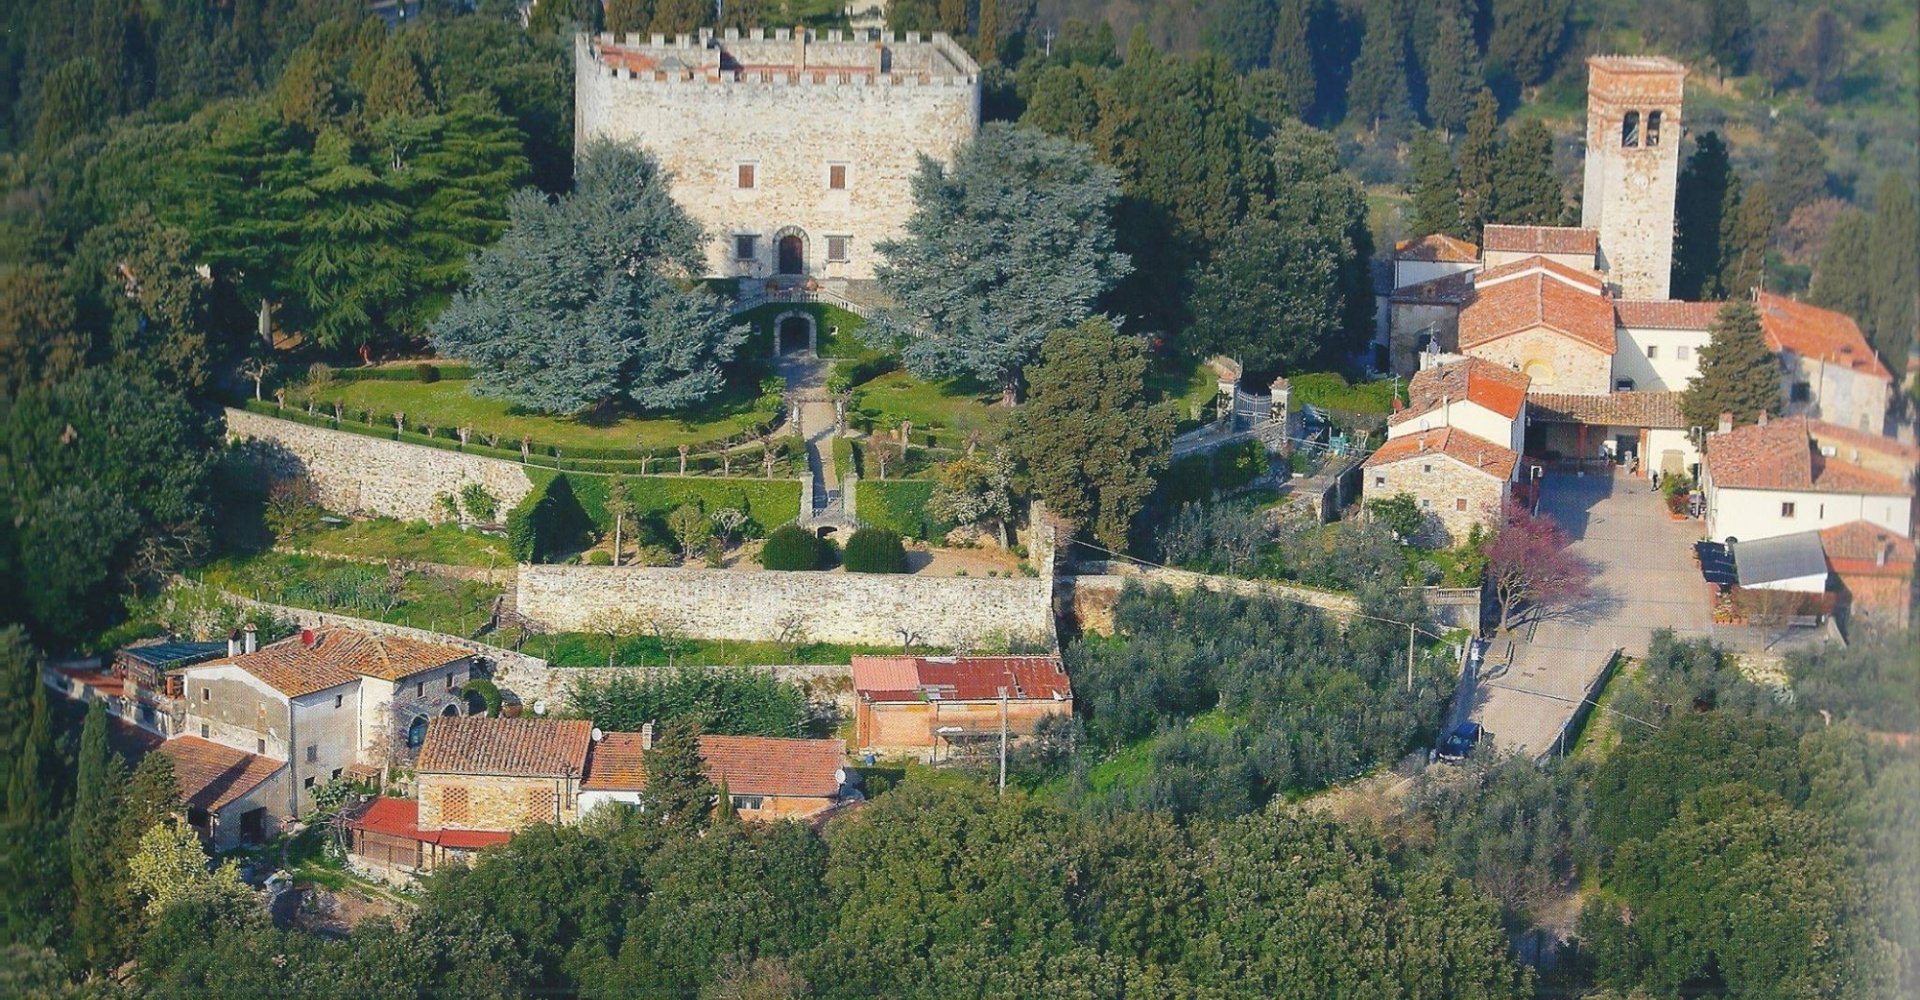 Montemurlo Castle